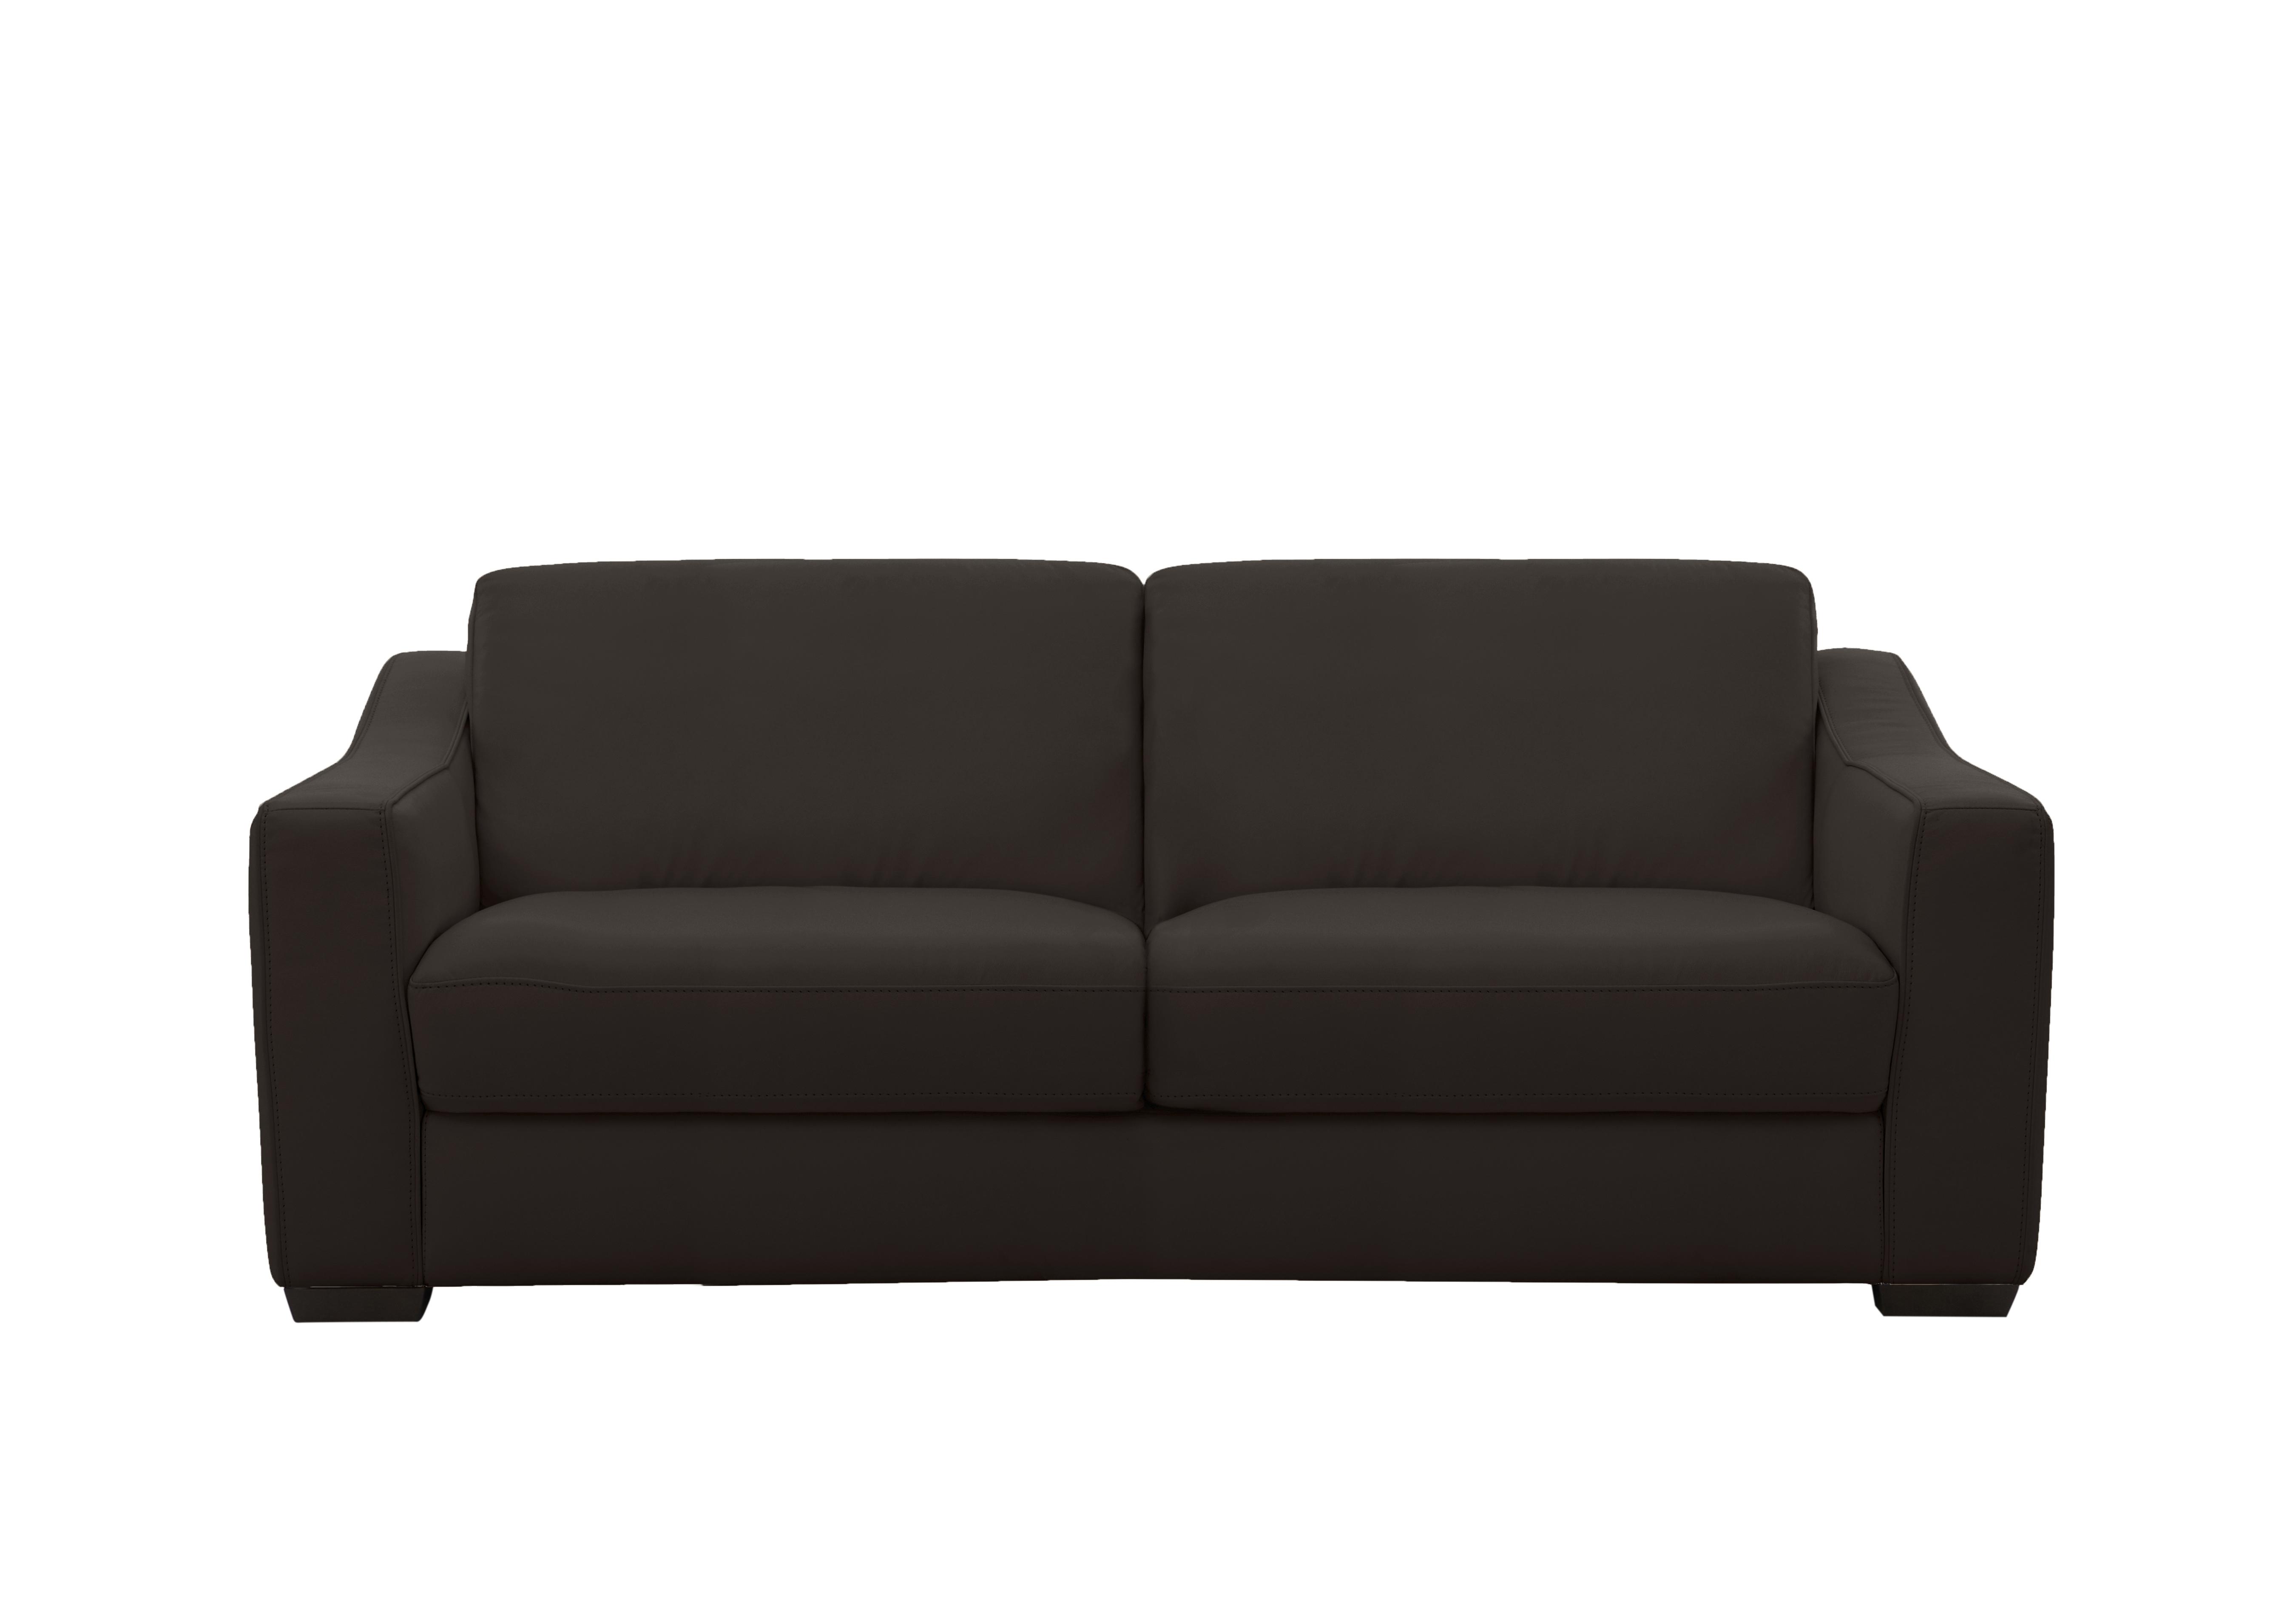 Optimus 3 Seater Leather Sofa in Bv-1748 Dark Chocolate on Furniture Village